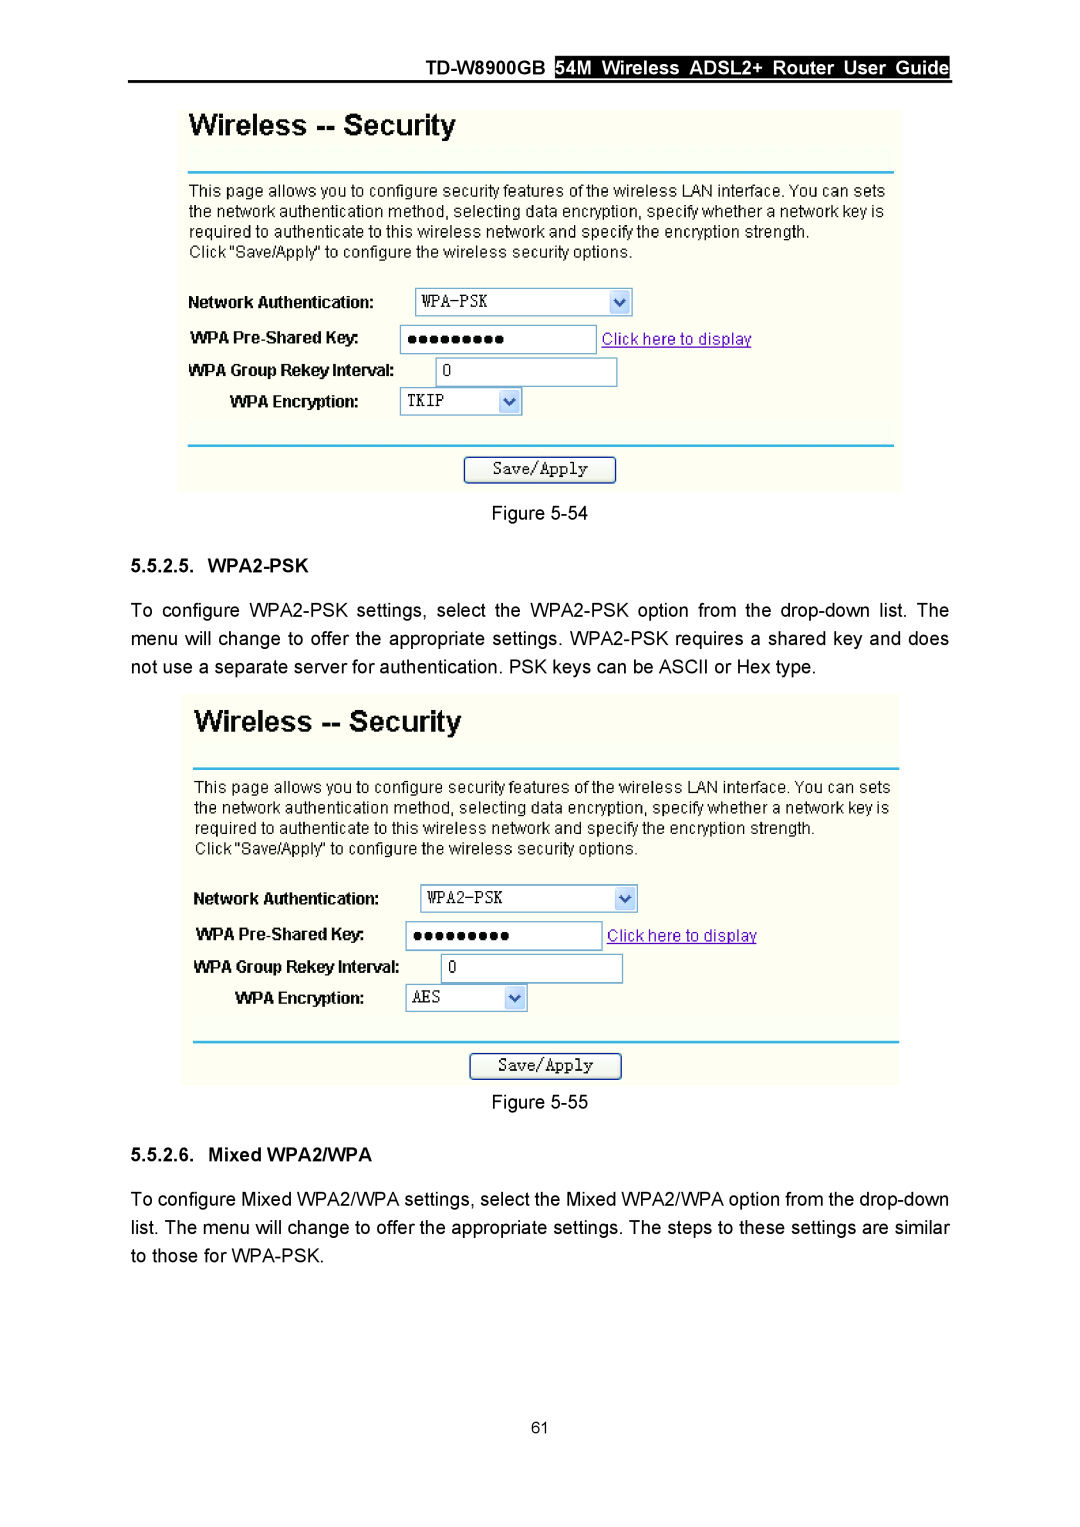 TP-Link manual TD-W8900GB 54M Wireless ADSL2+ Router User Guide, WPA2-PSK, Mixed WPA2/WPA 